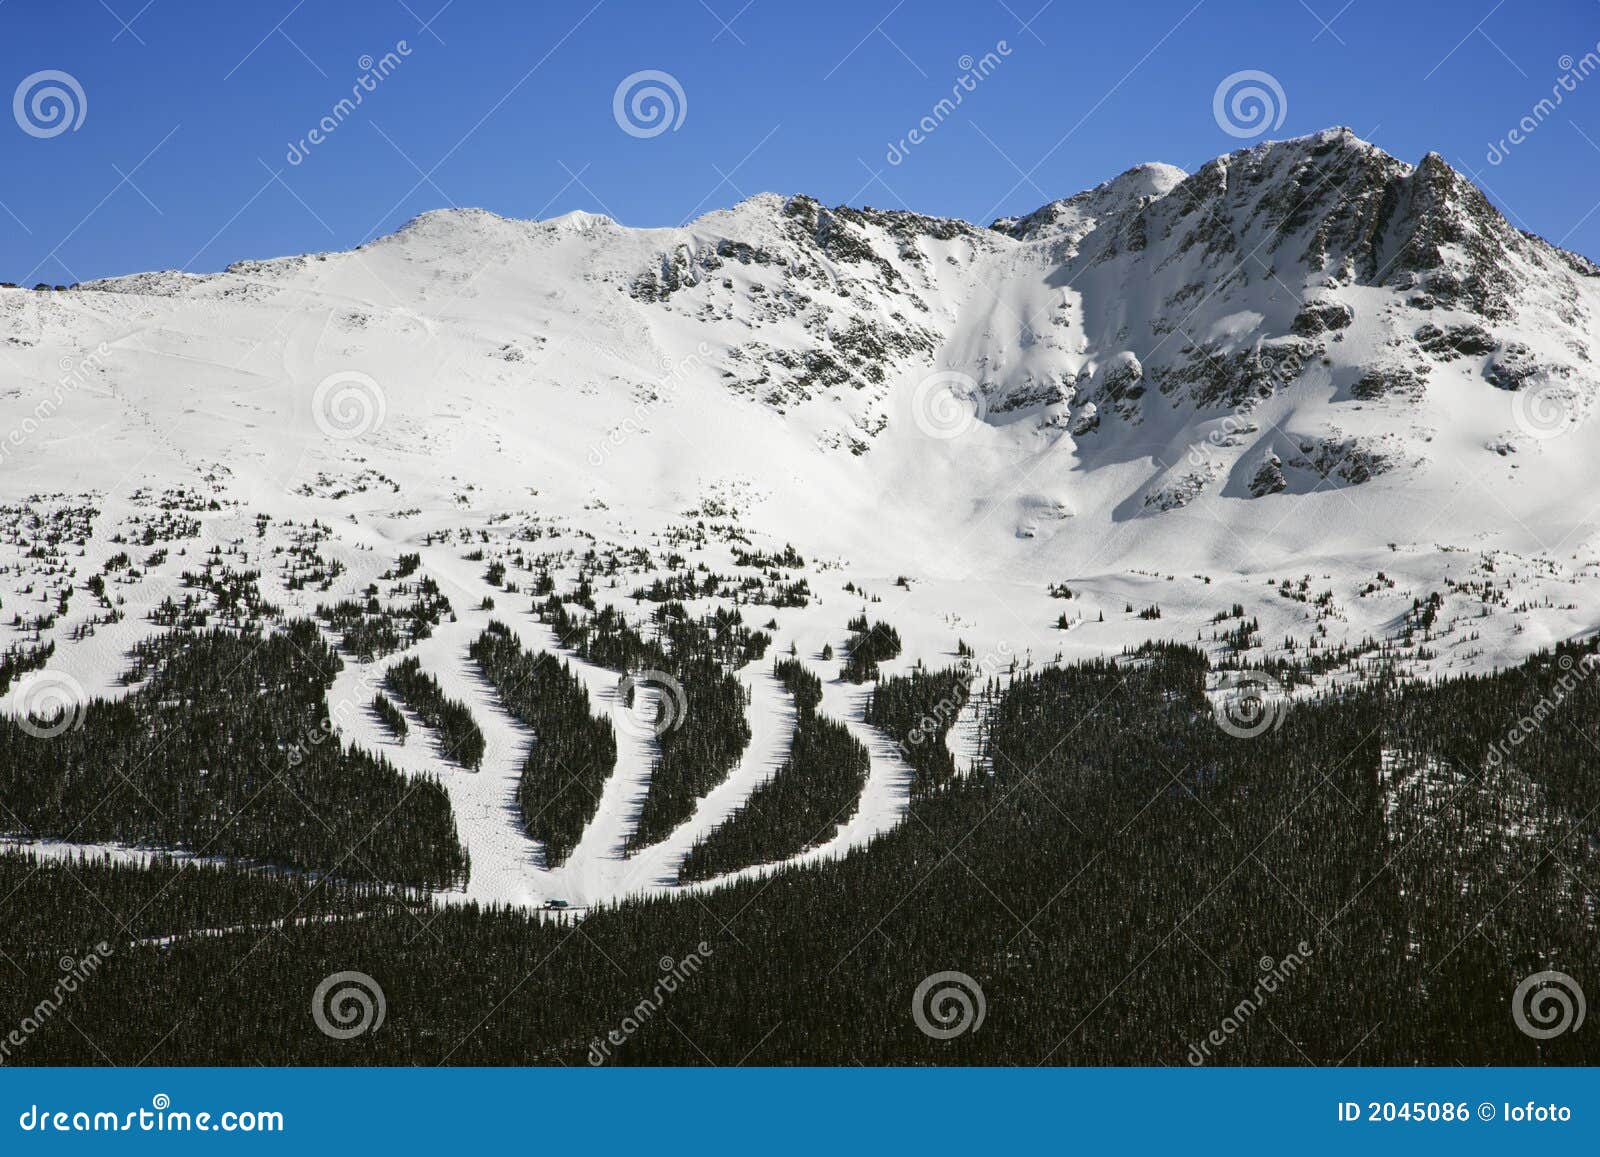 ski resort trails on mountain.